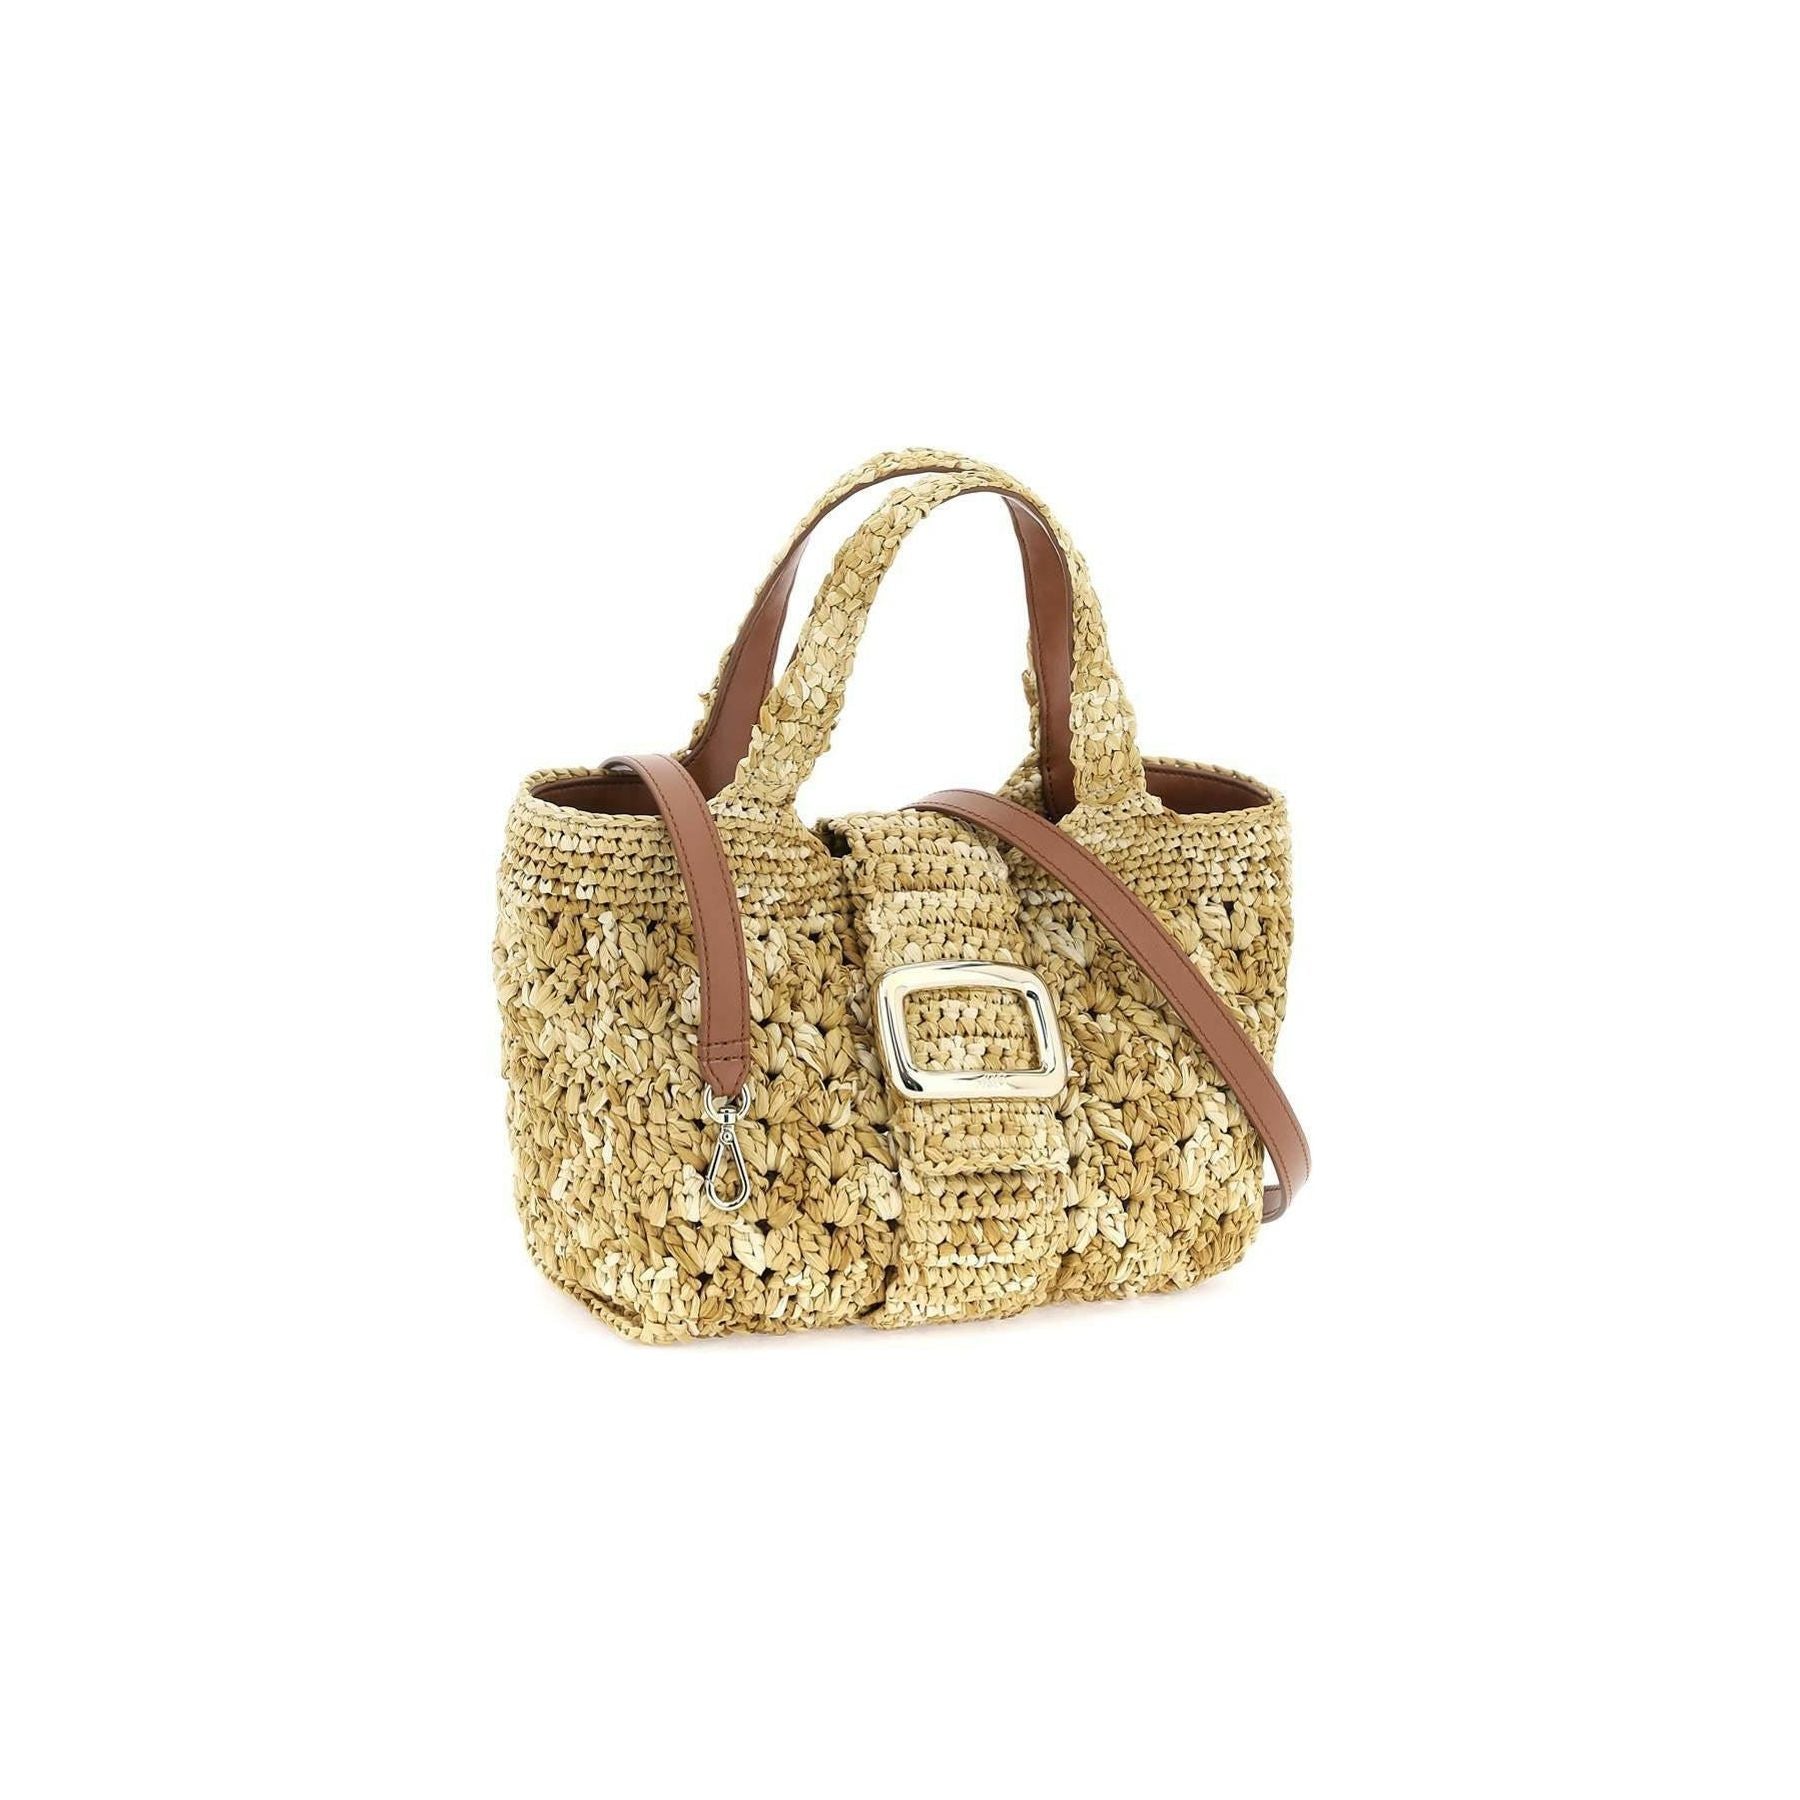 Viv' Choc Crochet Raffia Shopping Bag with Leather Details ROGER VIVIER JOHN JULIA.